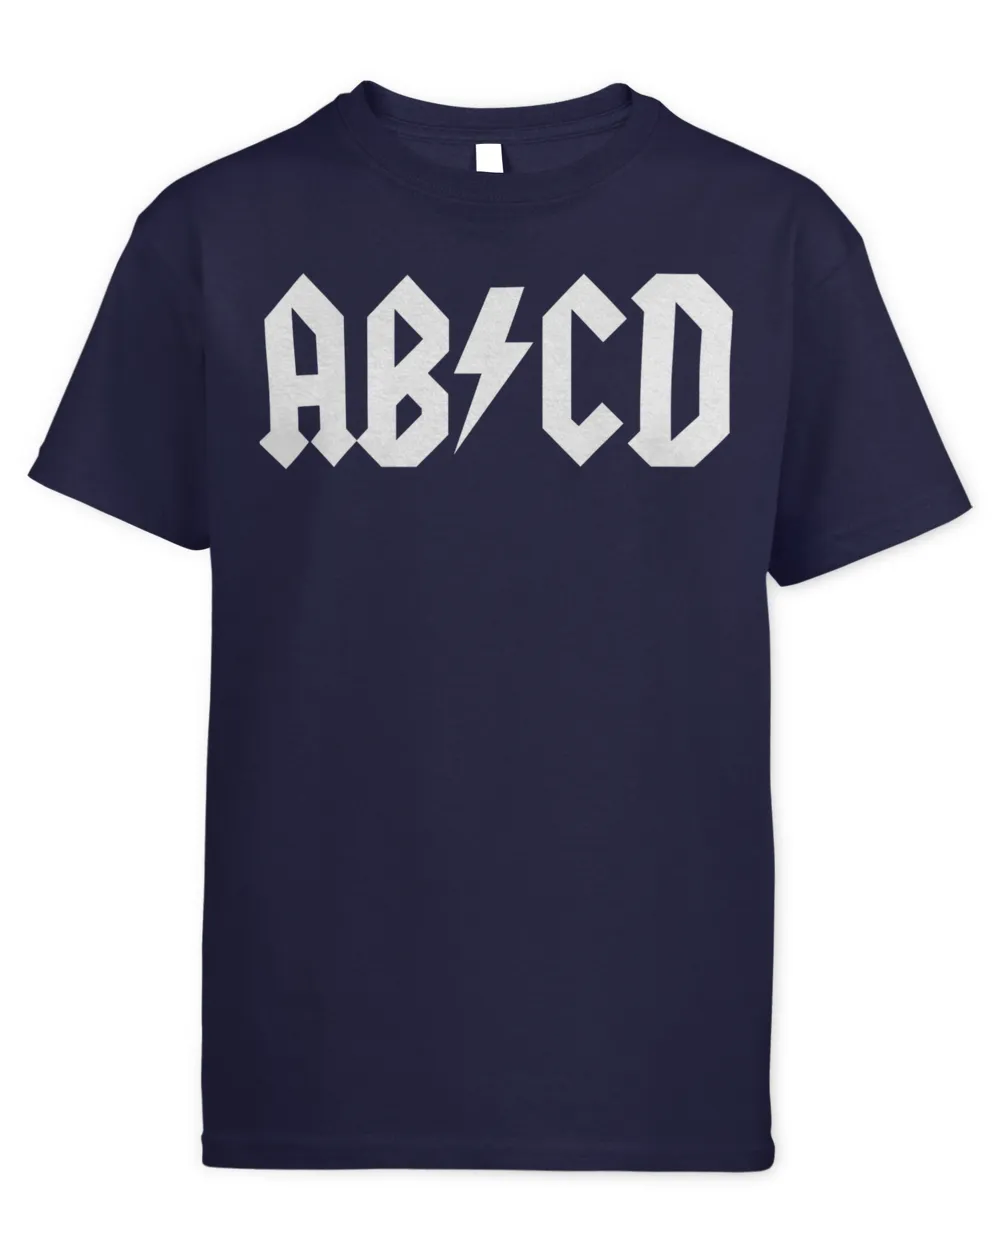 Boys Girls Teachers ABCD Rock Graphic back to School T-Shirt